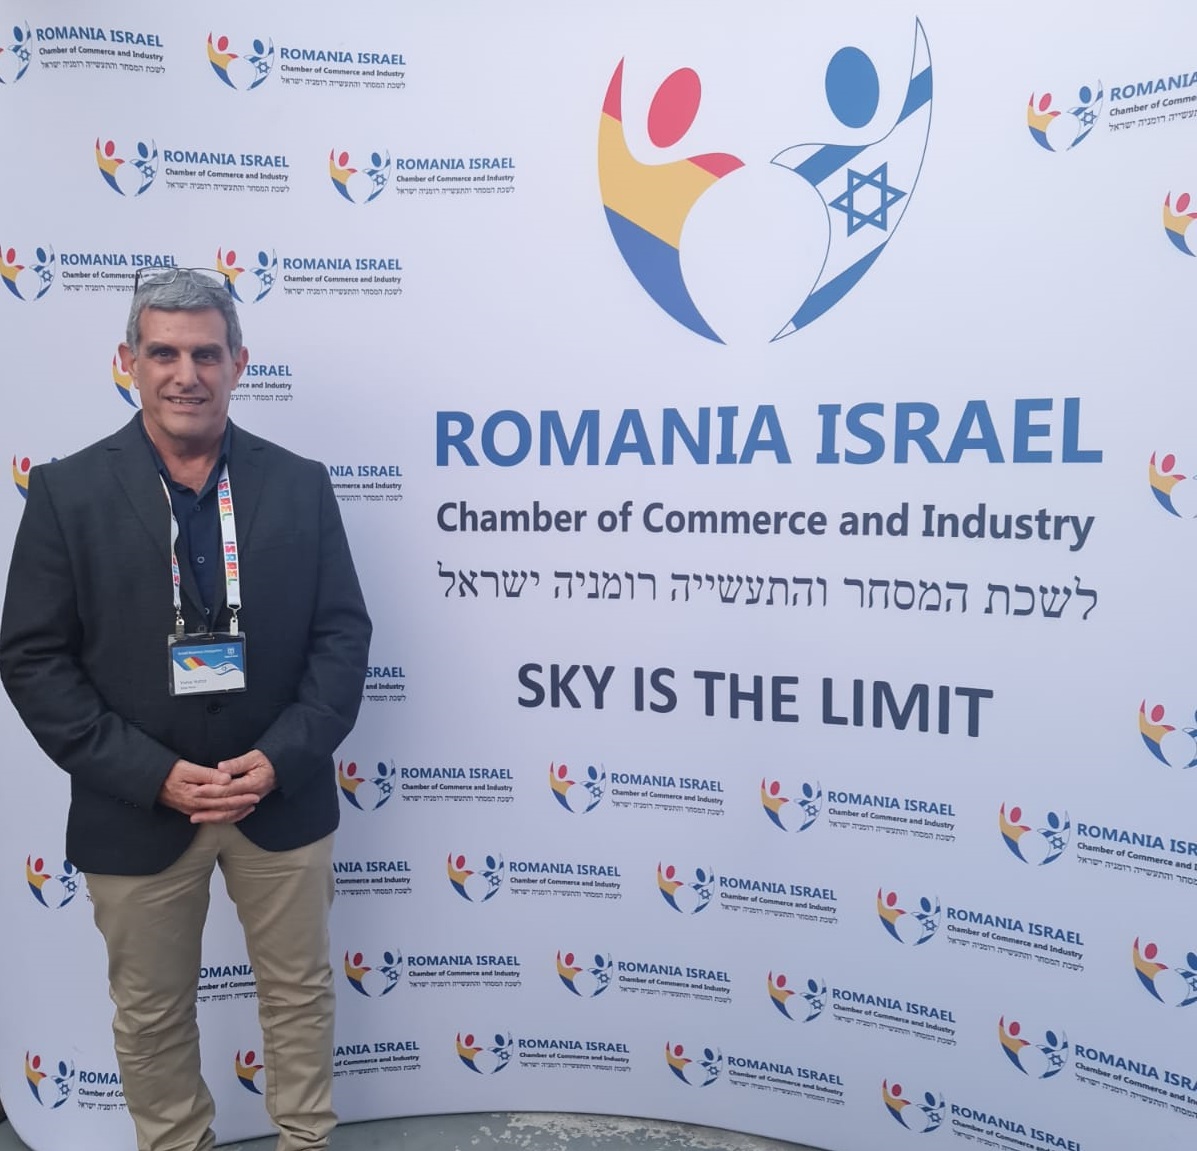 Romania Israel Chamber of Commerce